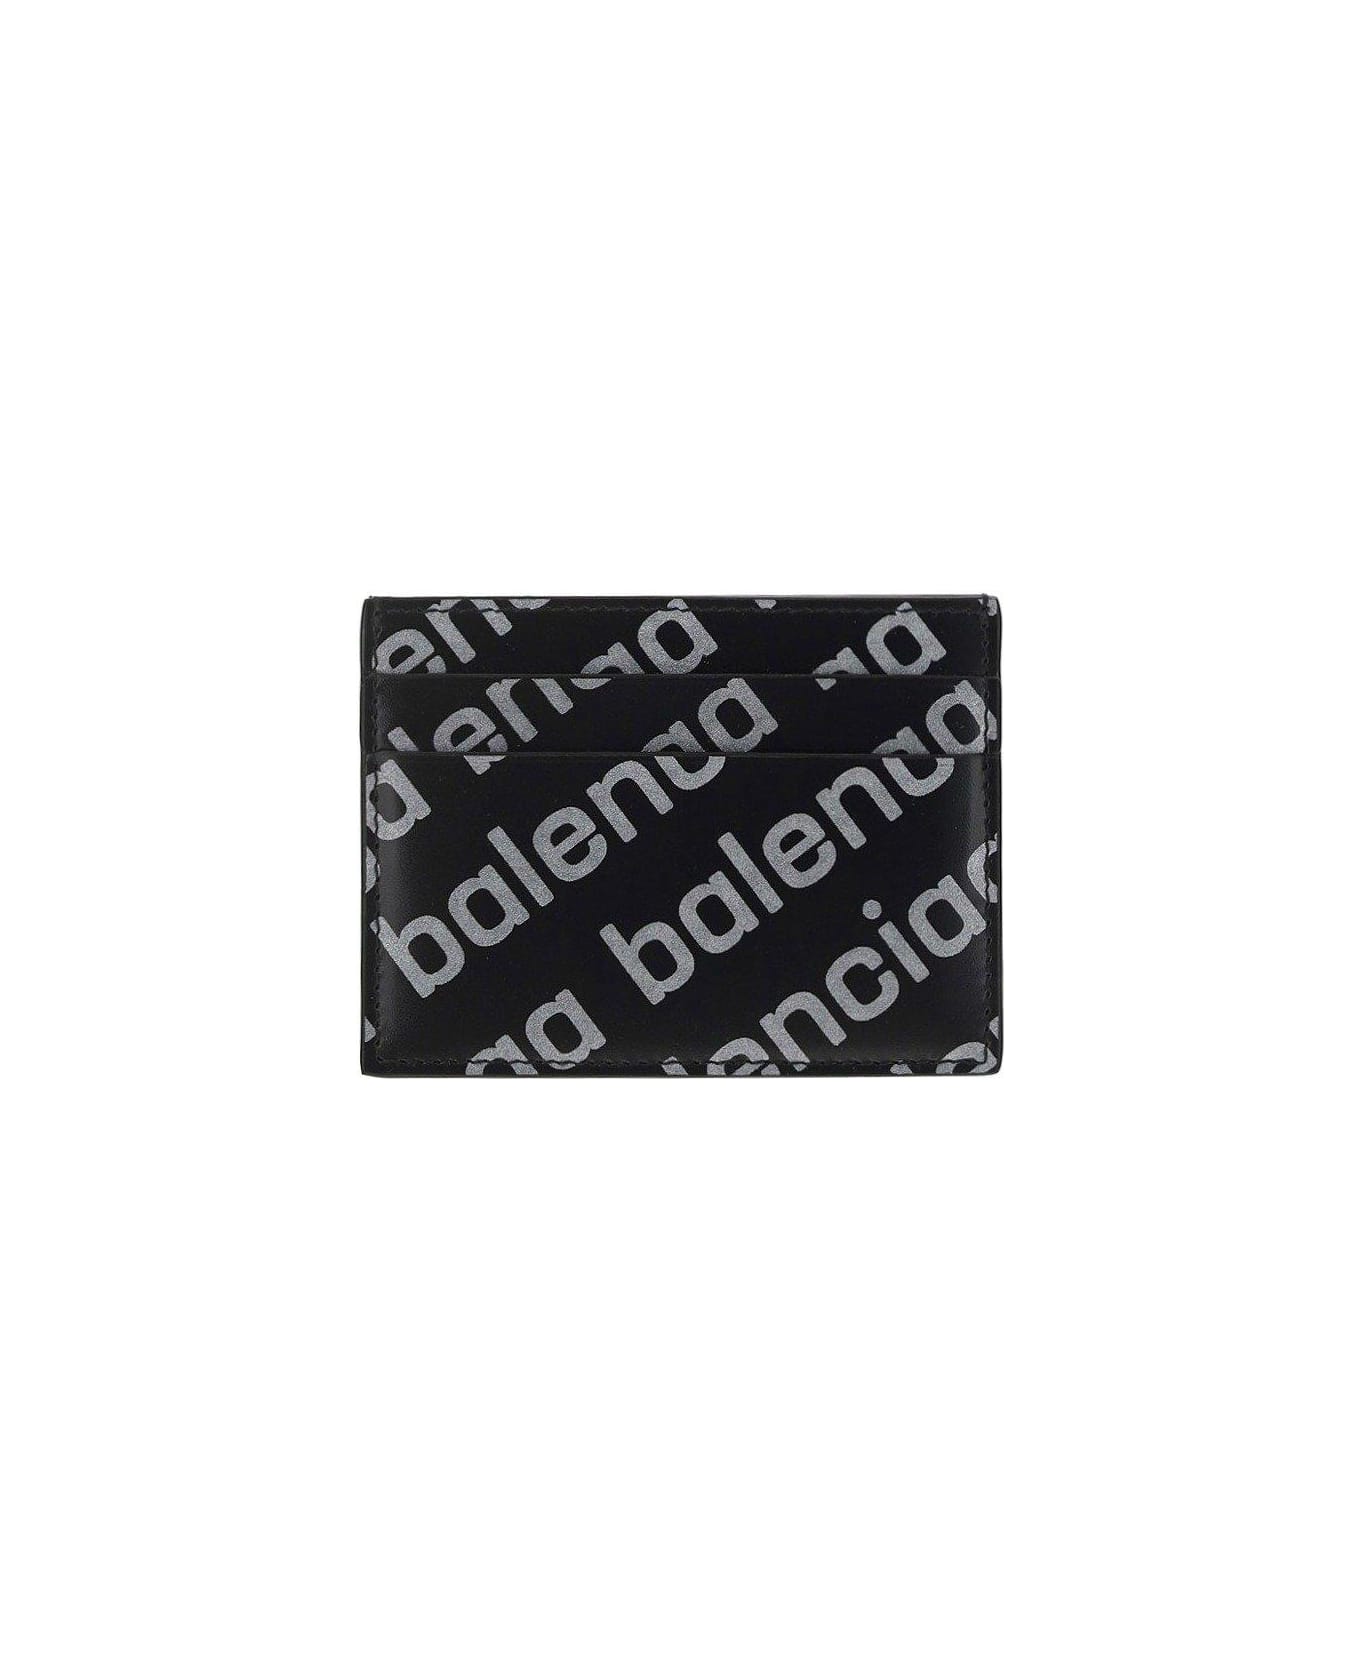 Balenciaga Reflective Printed Cash Card Holder - BLACK 財布